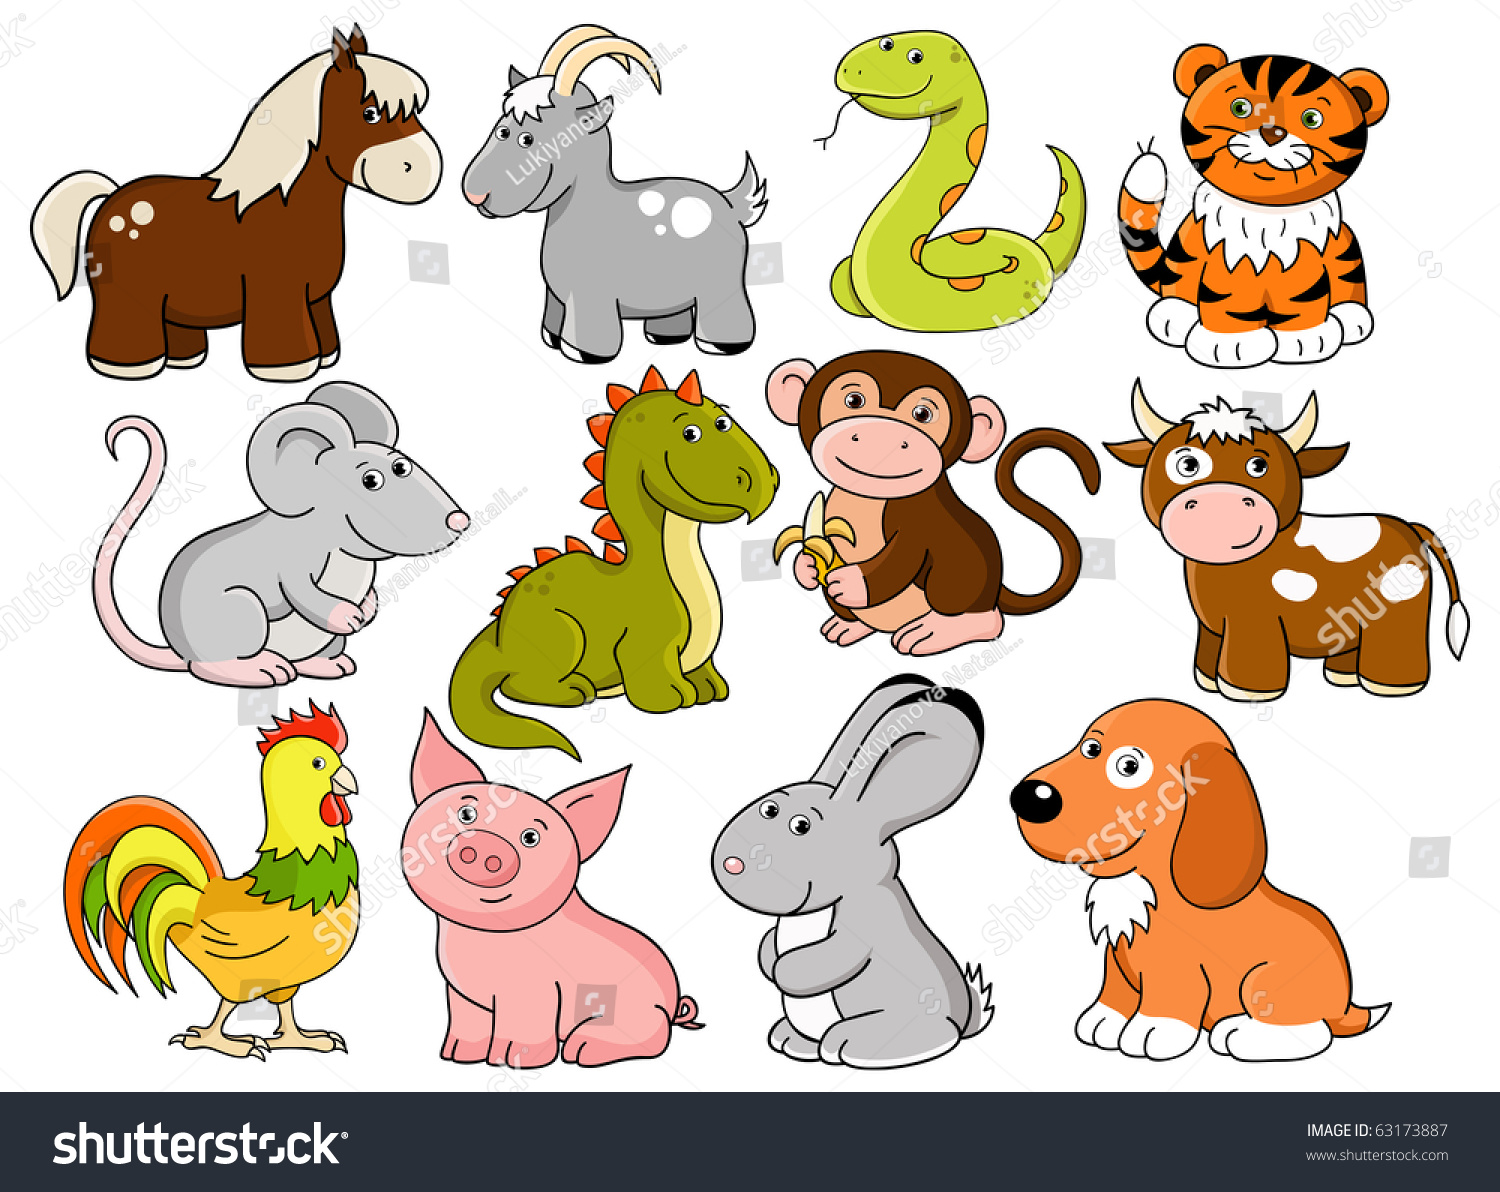 http://image.shutterstock.com/z/stock-vector-vector-animals-symbols-of-chinese-horoscope-63173887.jpg